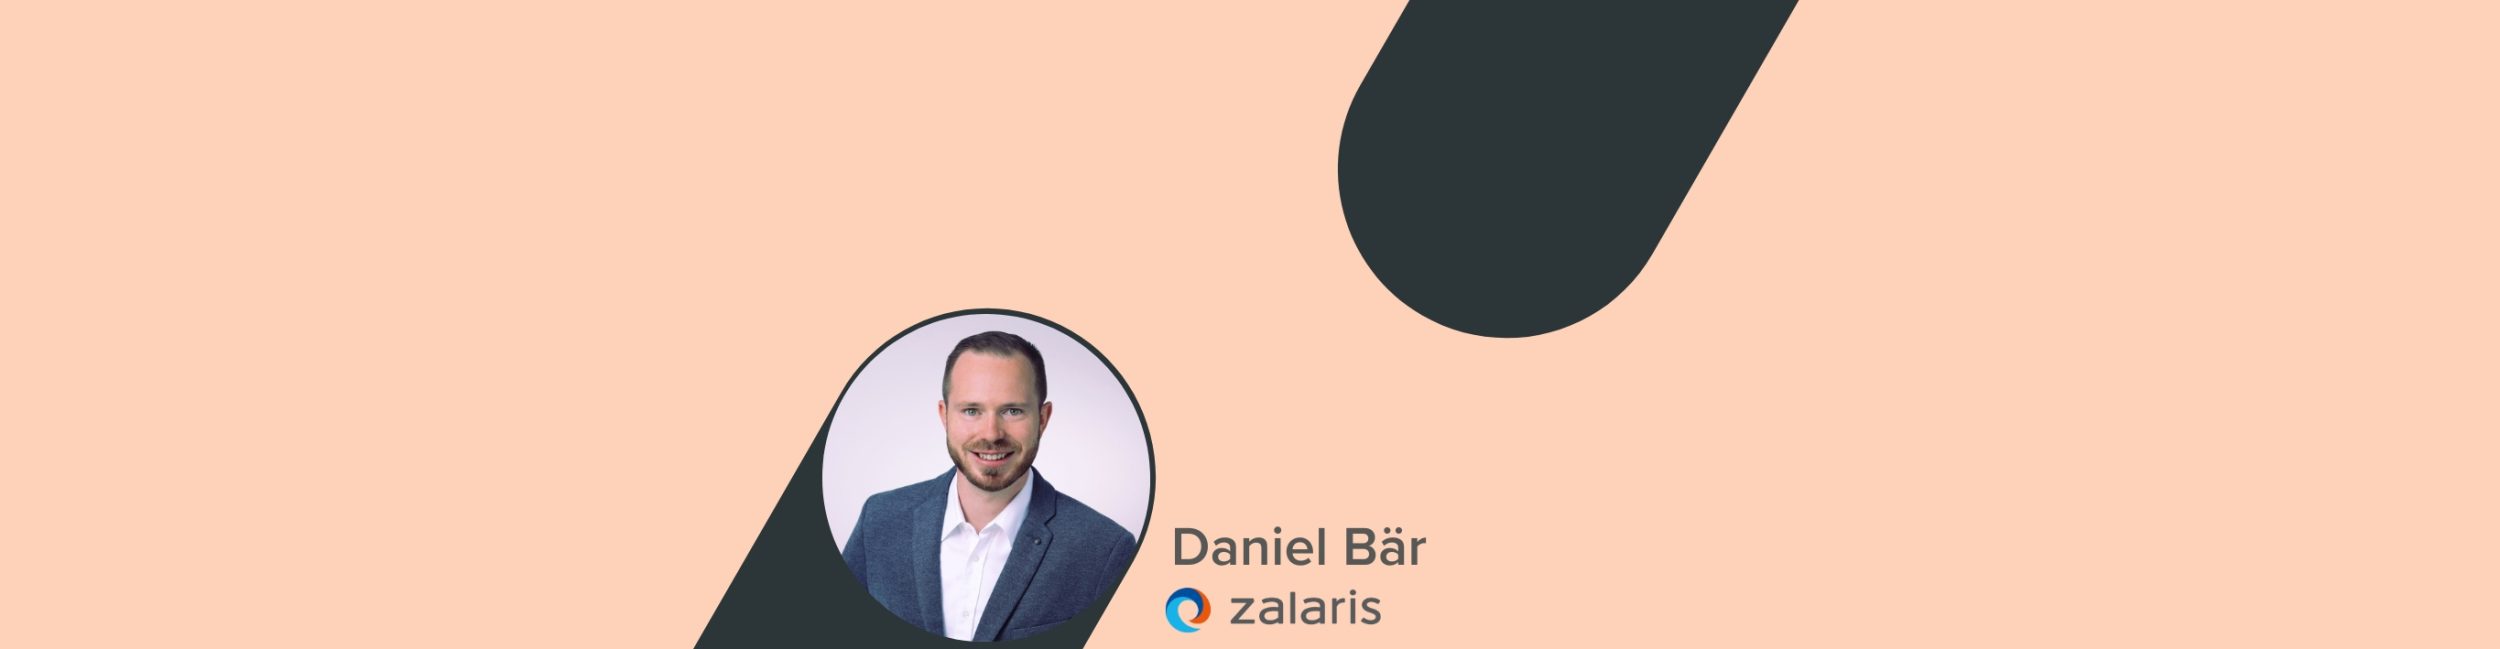 Daniel Bär SAP SuccessFactors Recruiting Demo